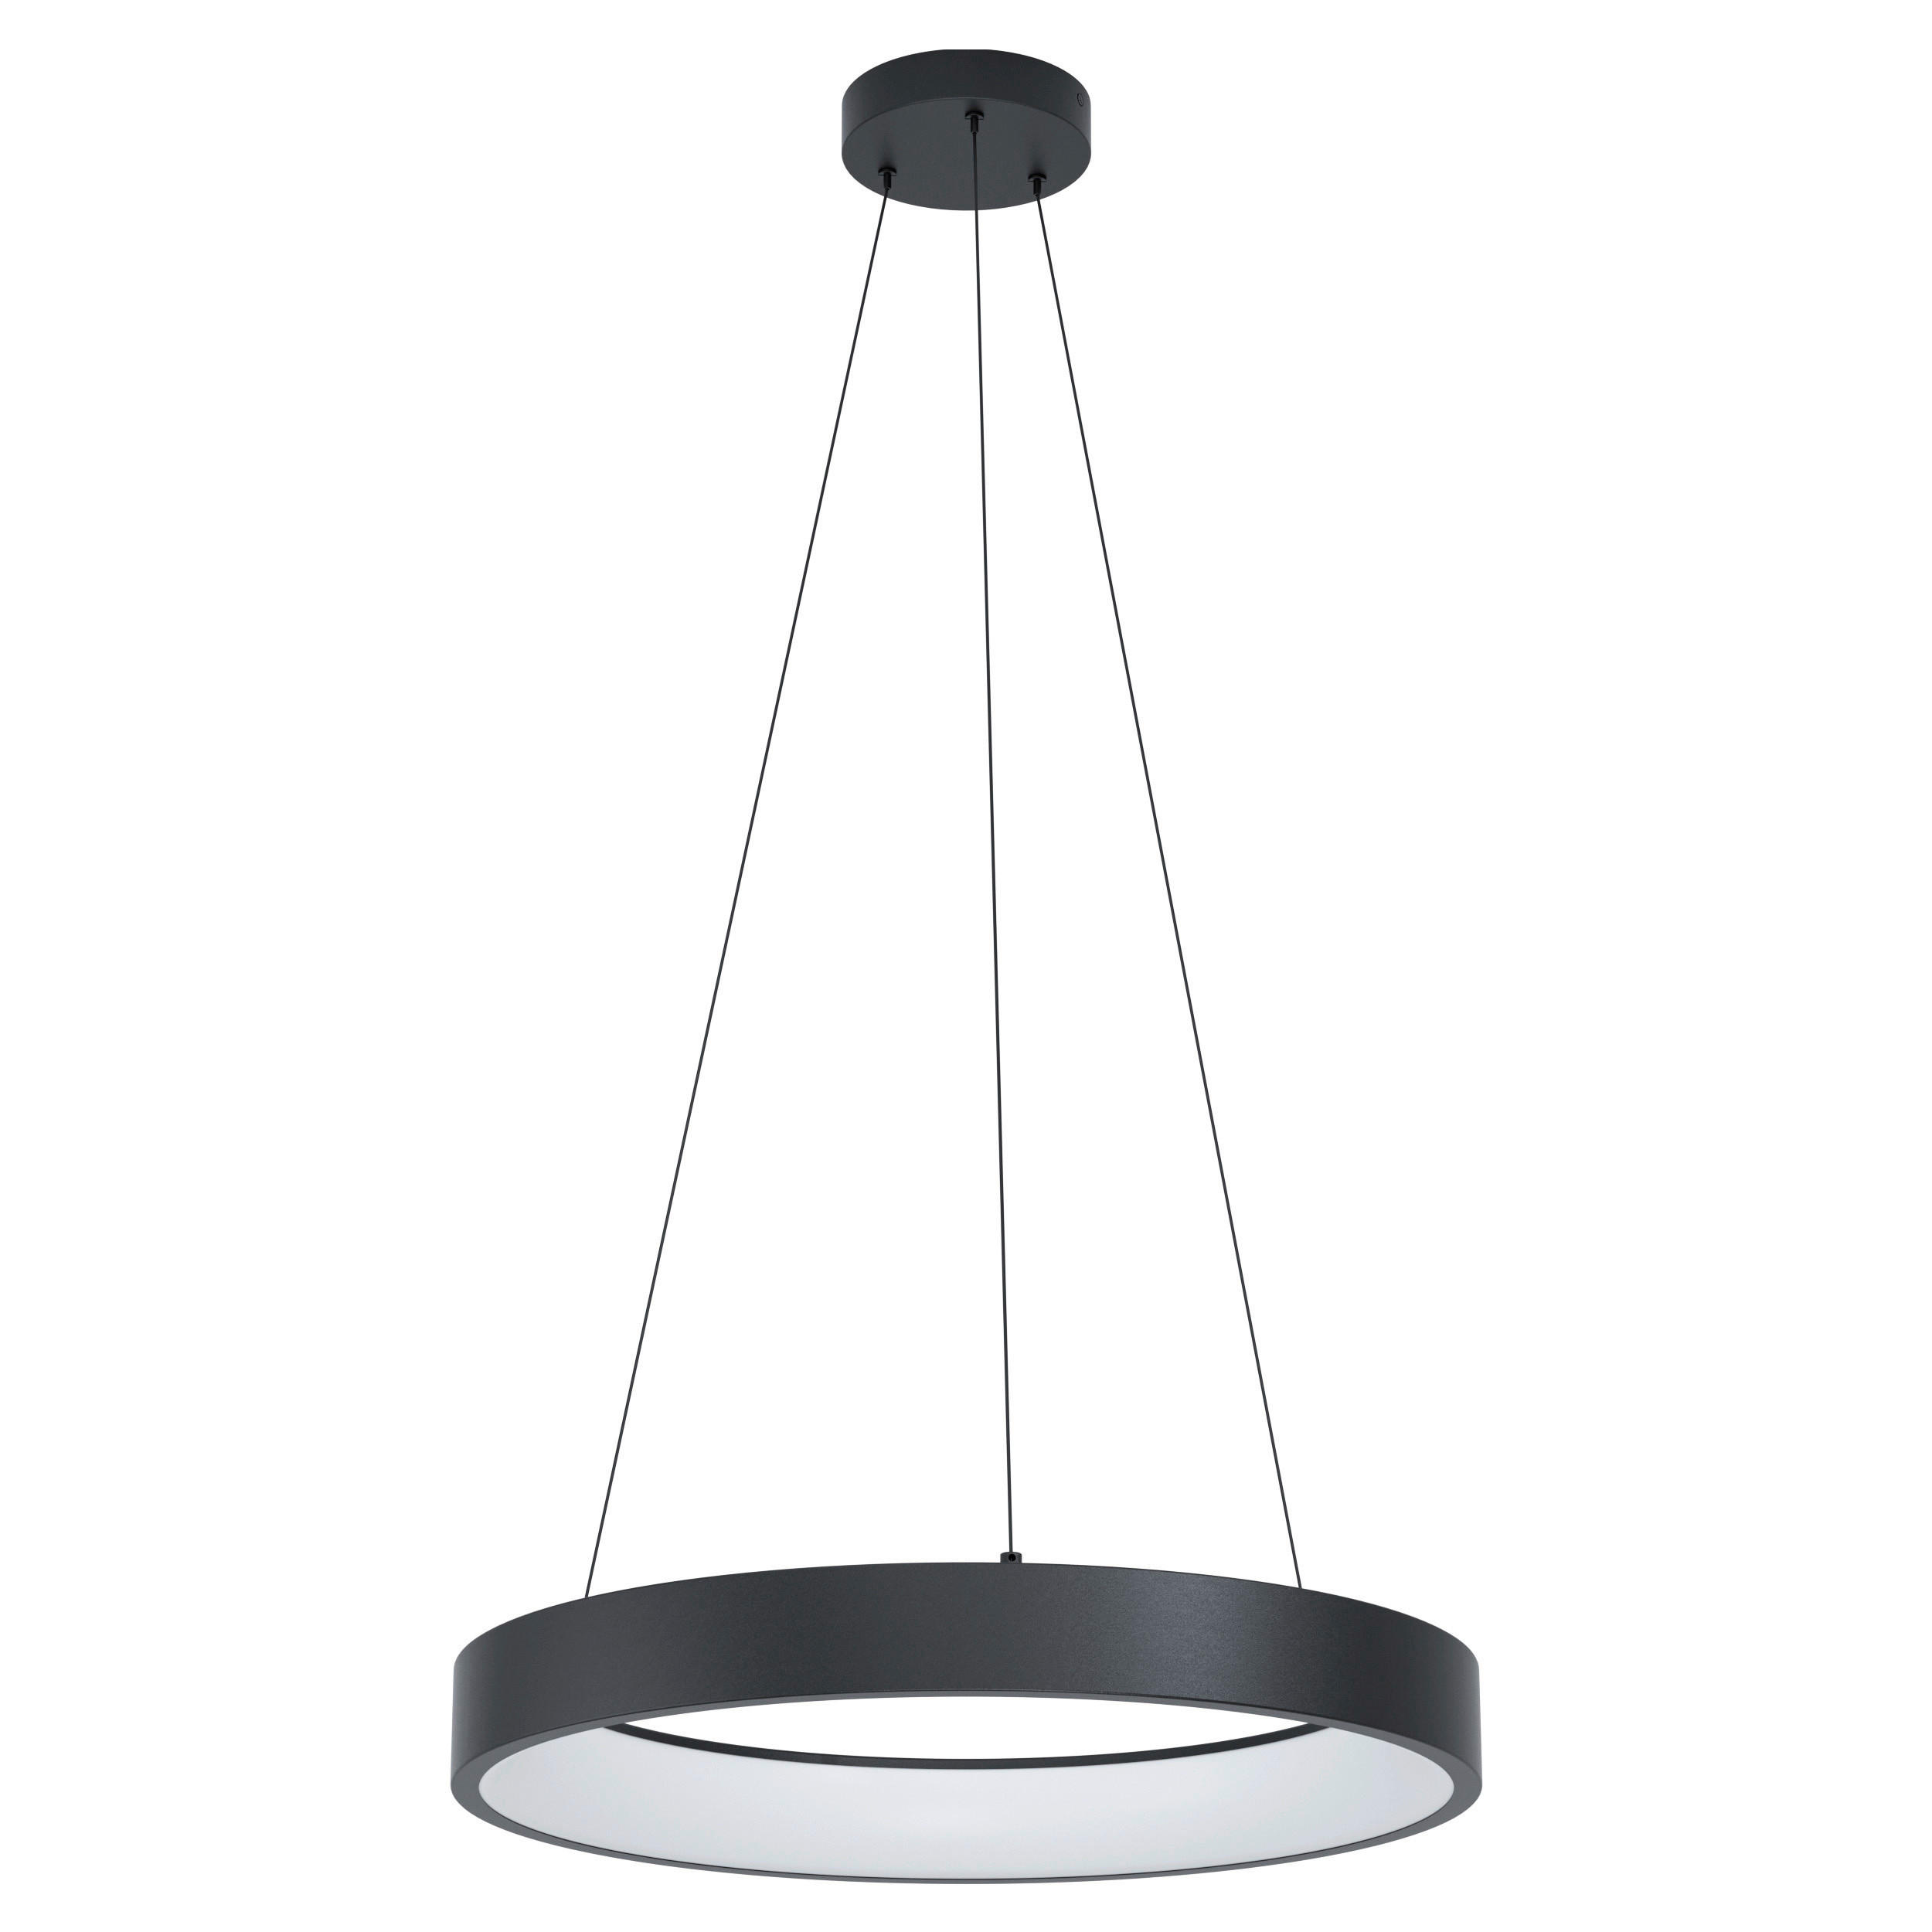 ZÁVĚSNÉ LED SVÍTIDLO, 60/110 cm  - bílá/černá, Design, kov/plast (60/110cm) - Eglo